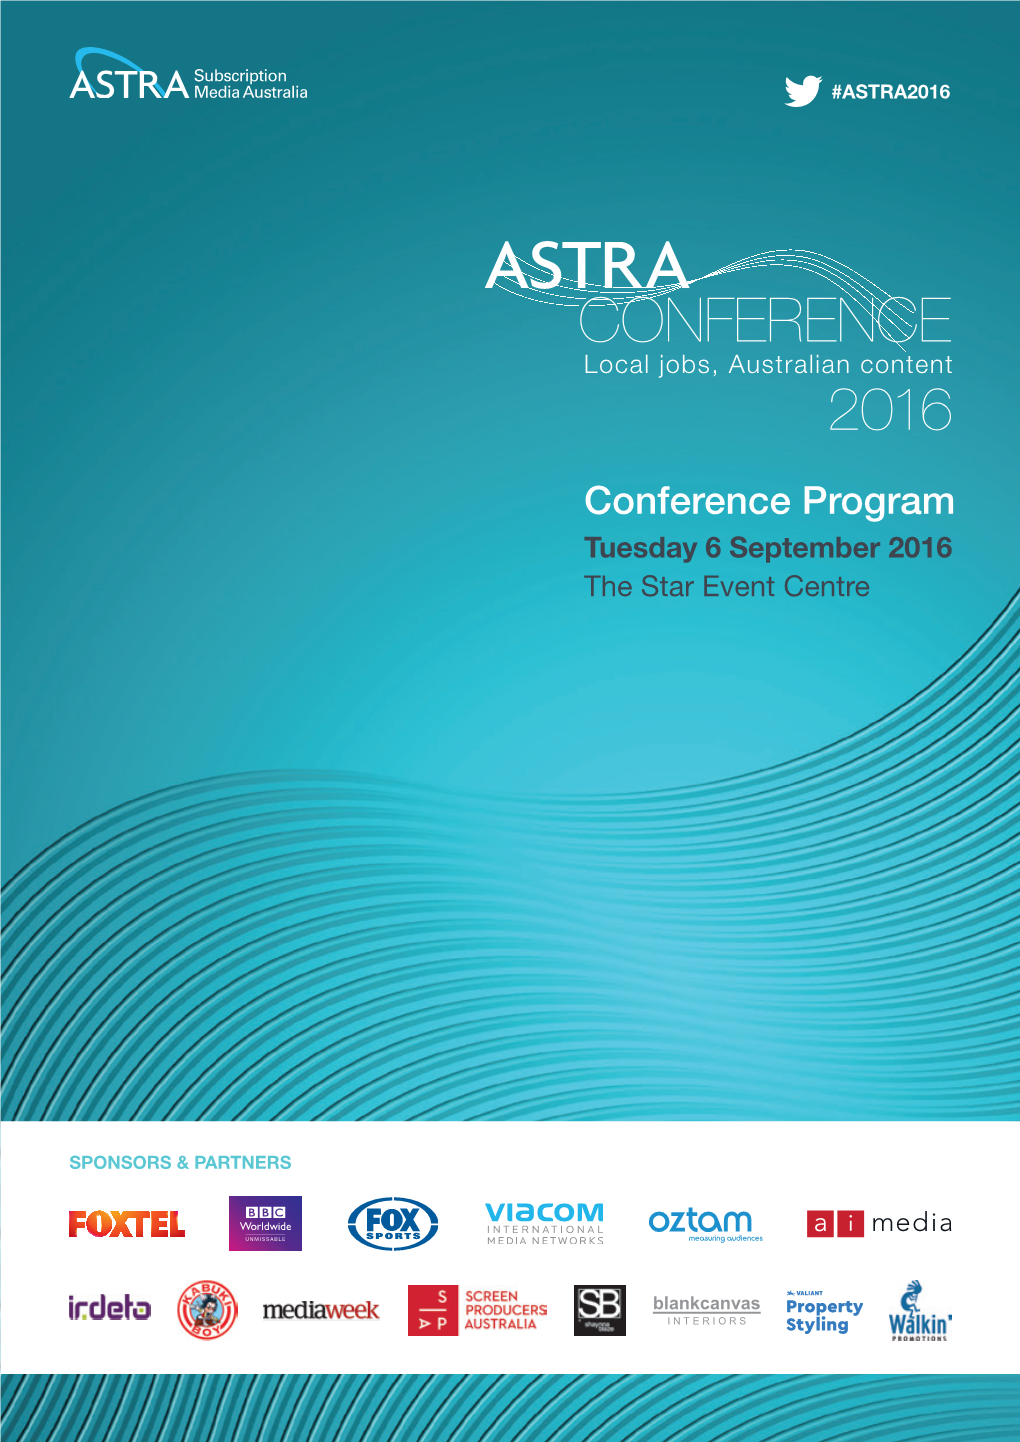 Conference Program Tuesday 6 September 2016 the Star Event Centre